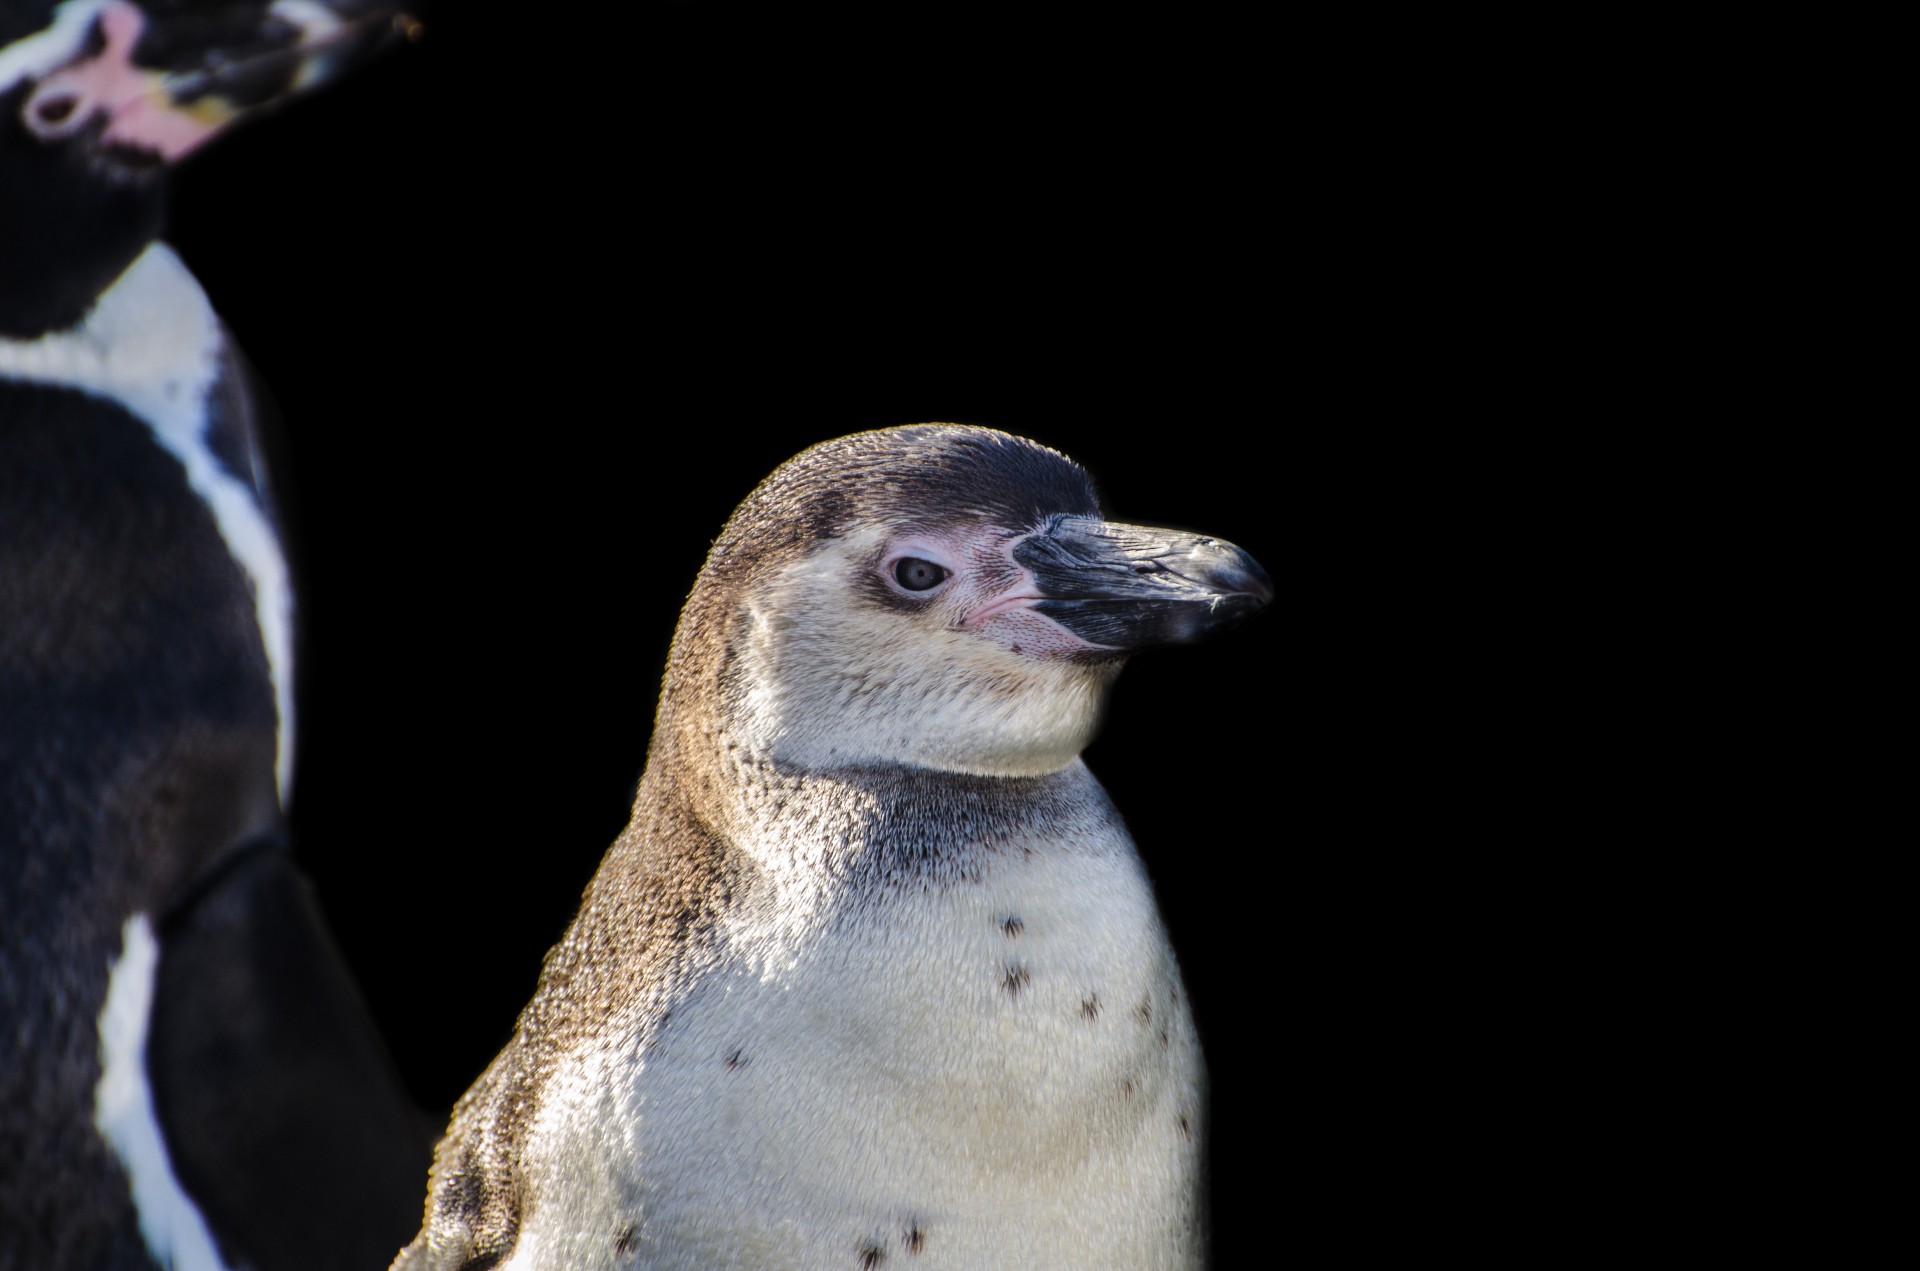 penguins humboldt wings free photo